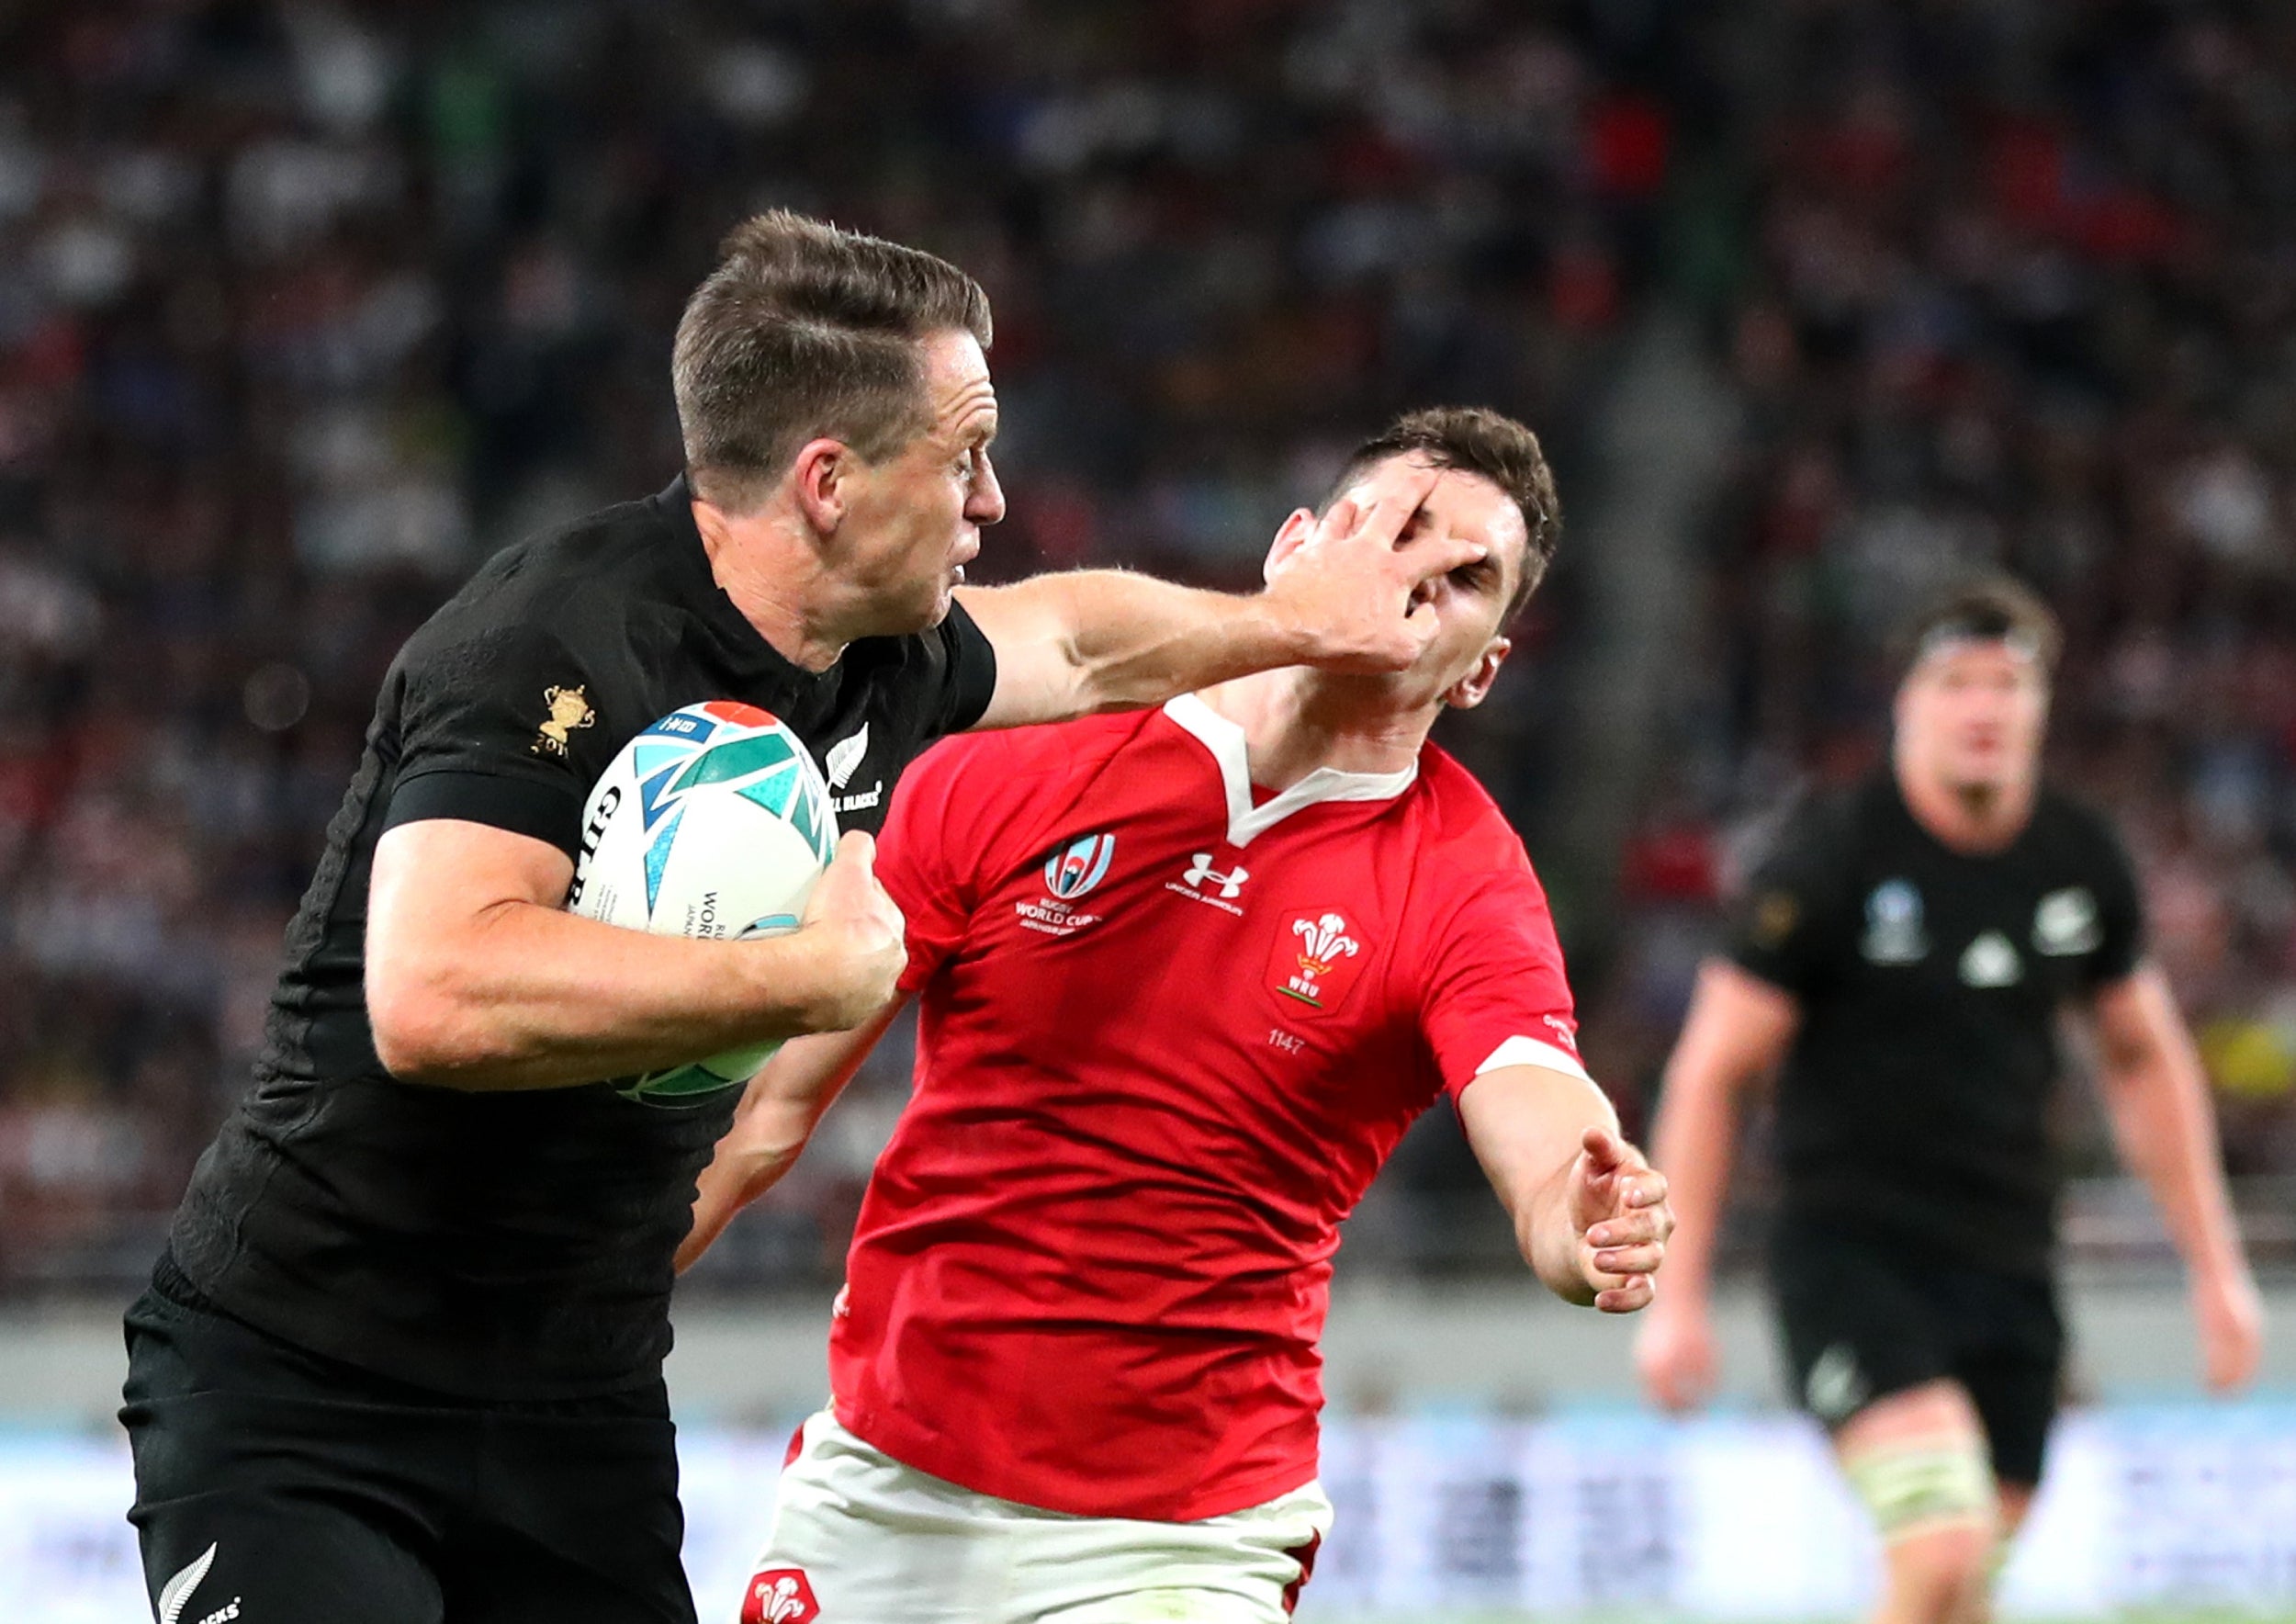 International rugby will miss Ben Smith